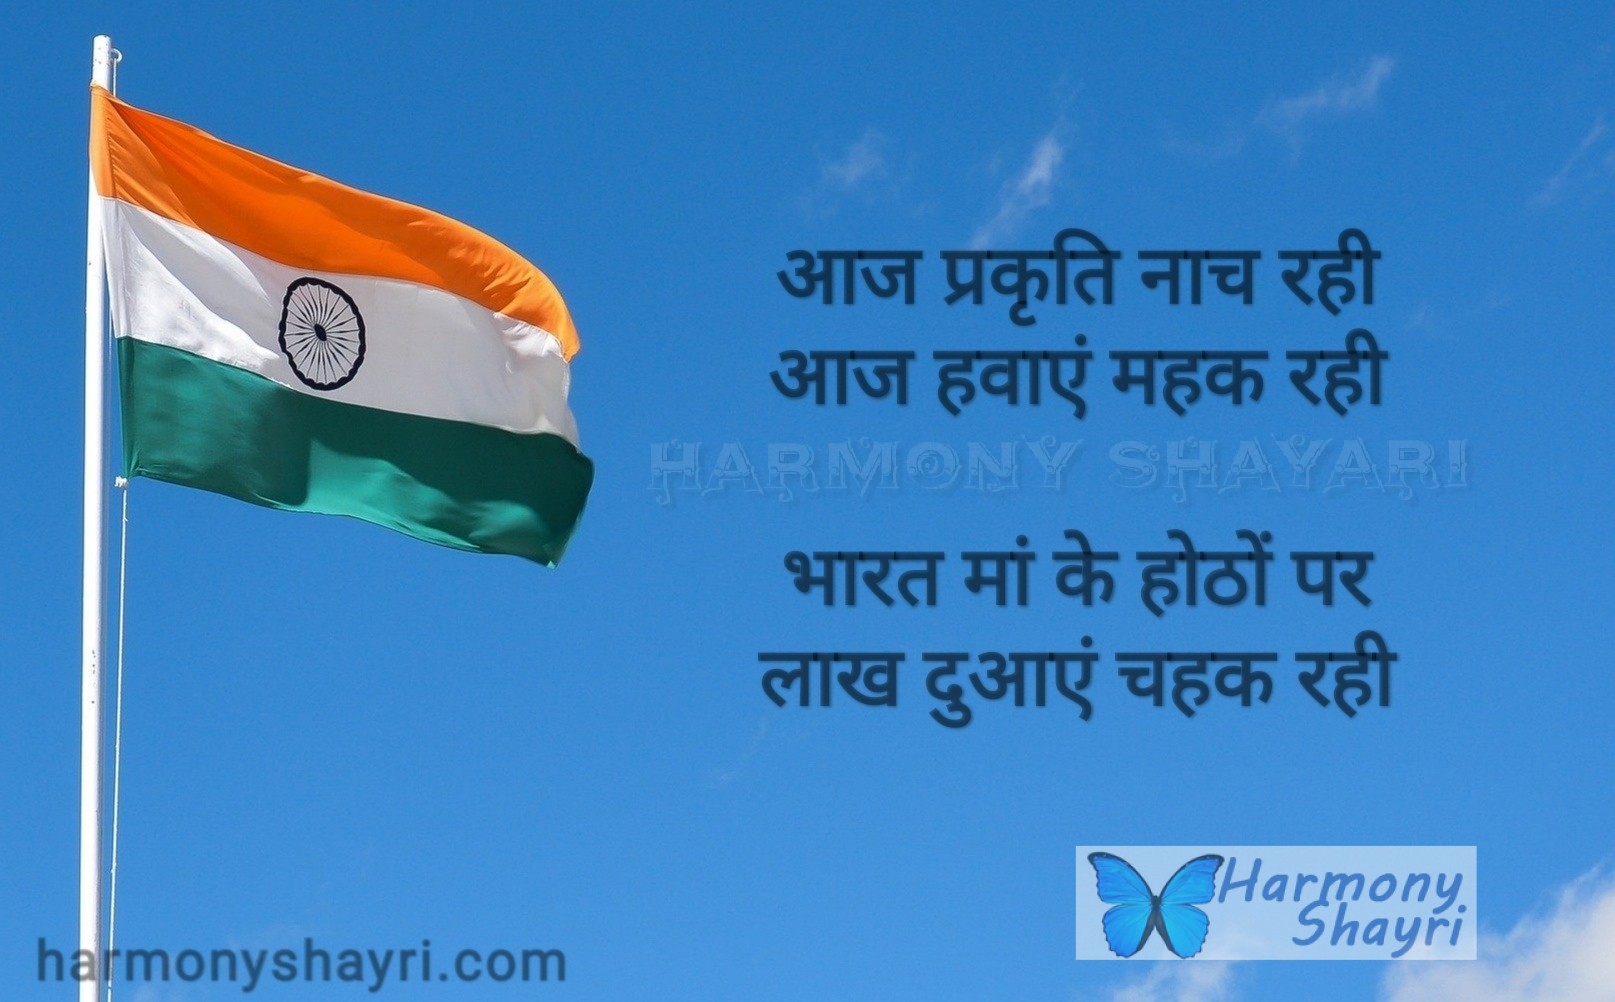 Aaj prakriti naach rahi – Happy Independence Day